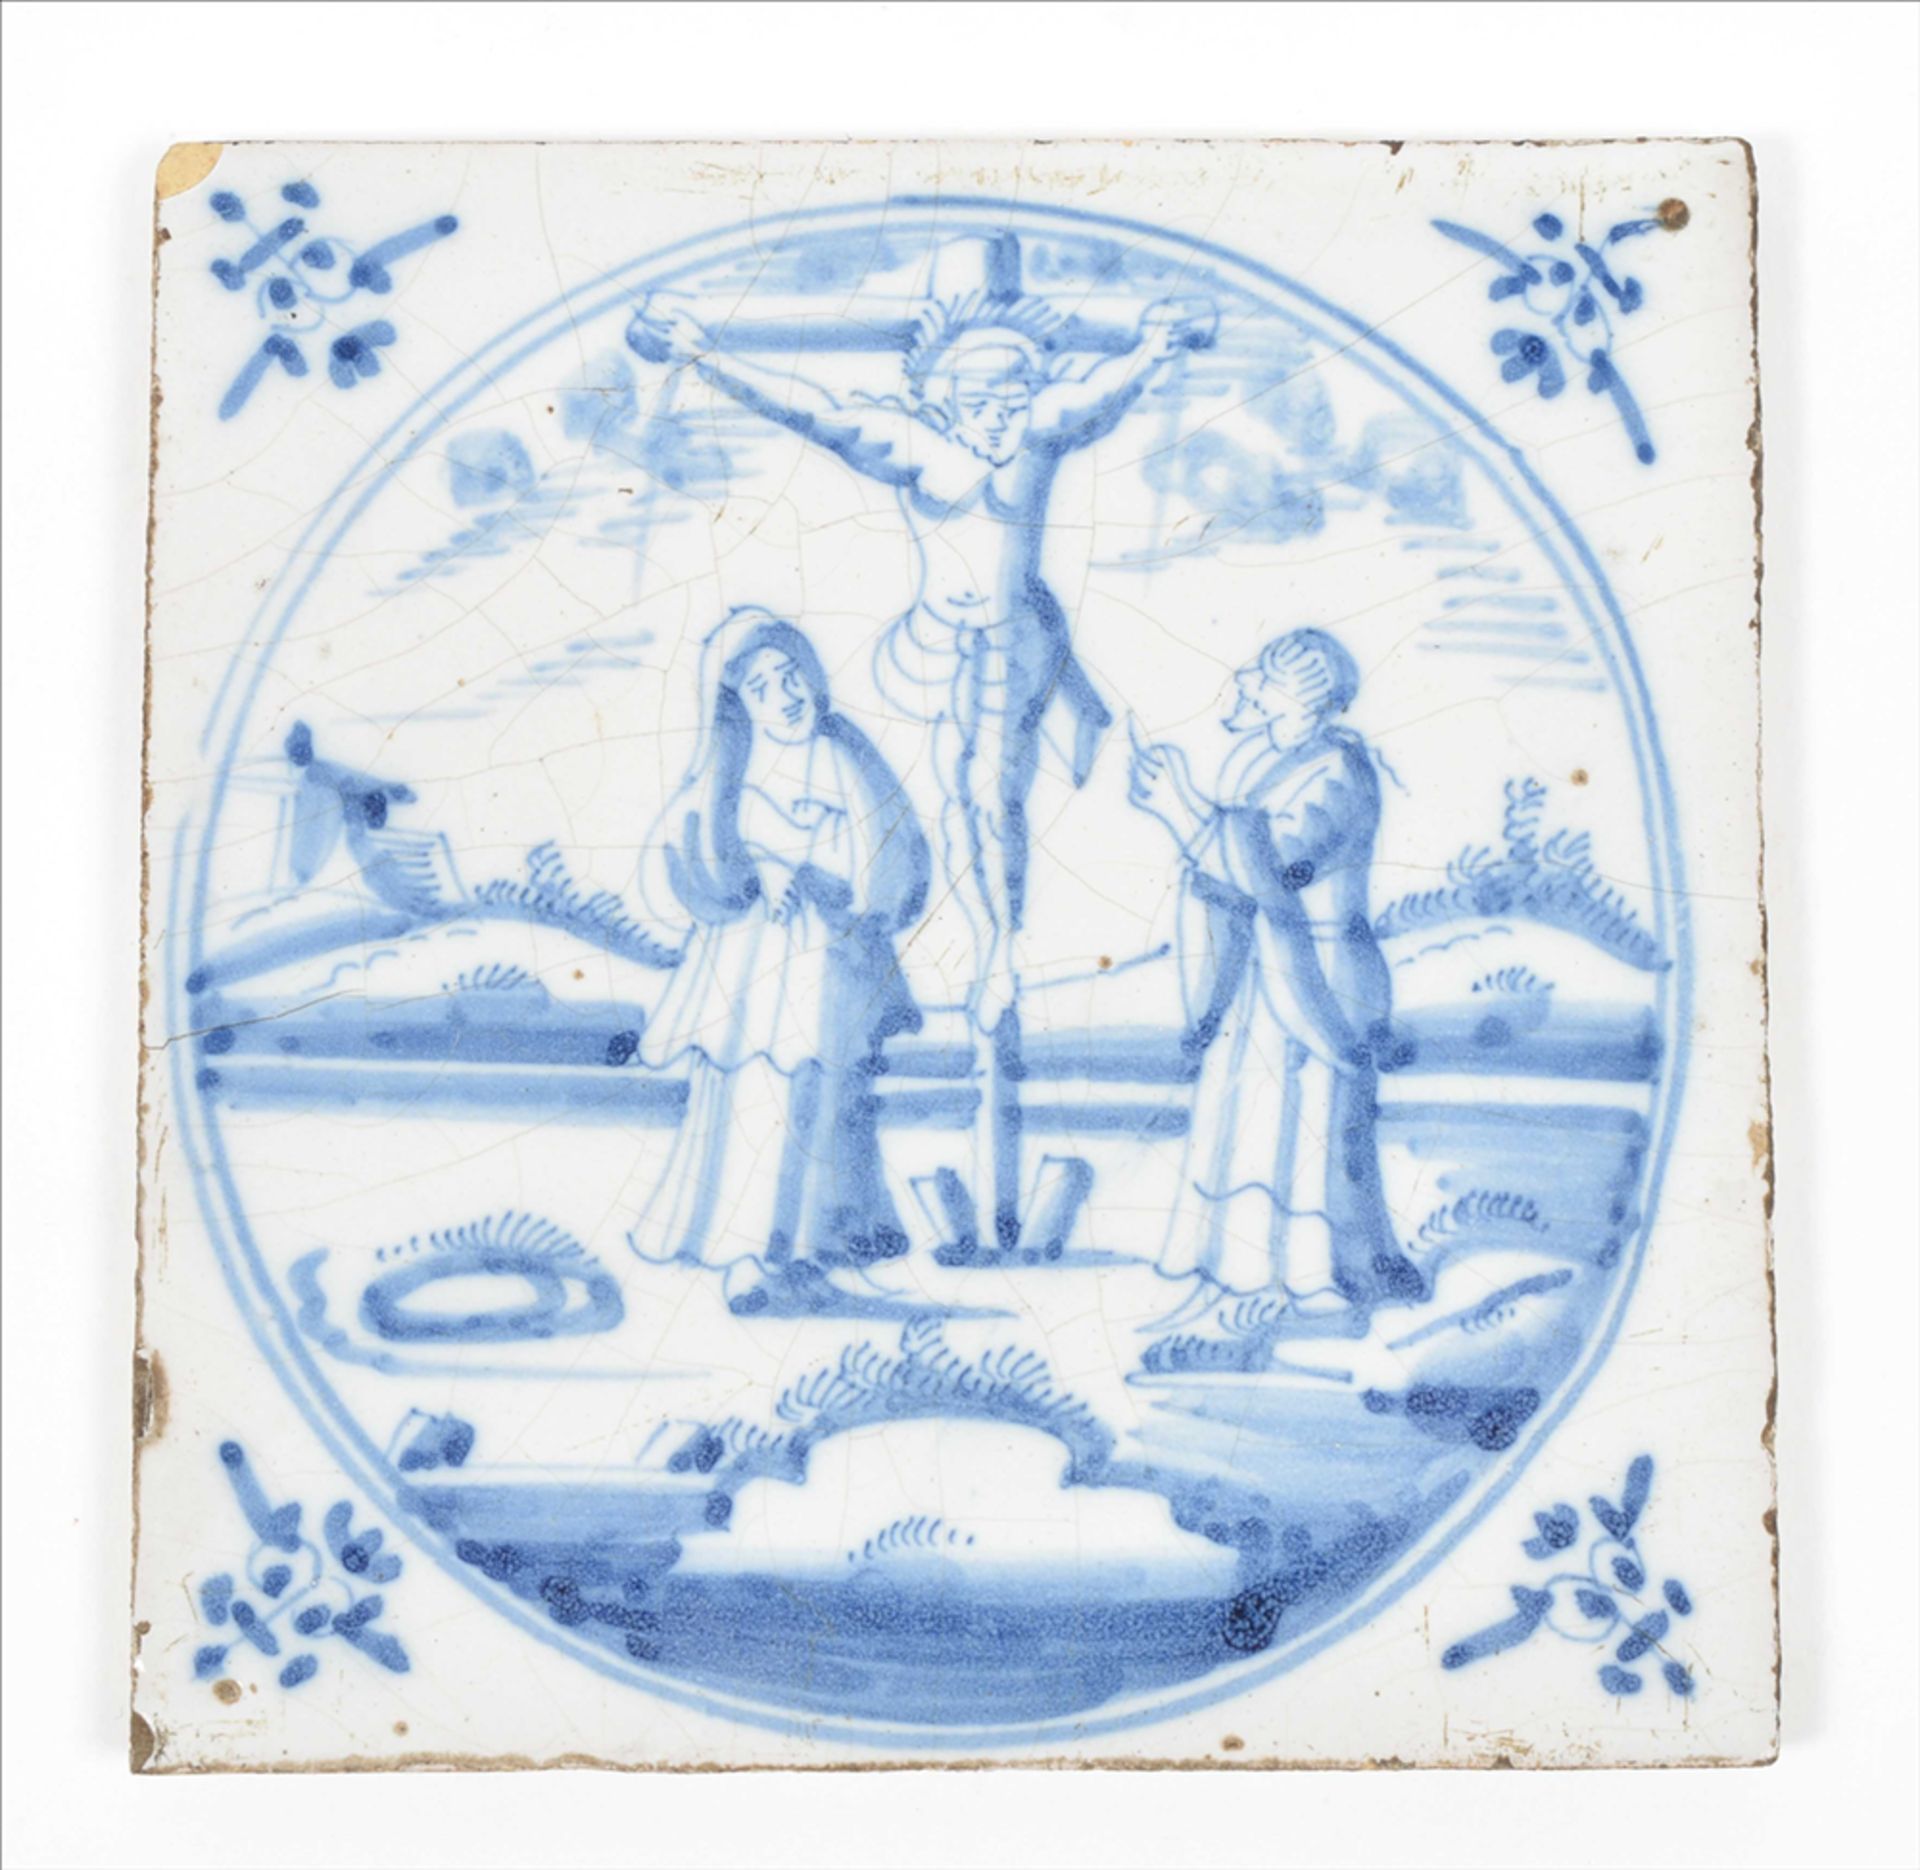 Nine Dutch tiles with biblical scenes - Image 4 of 7